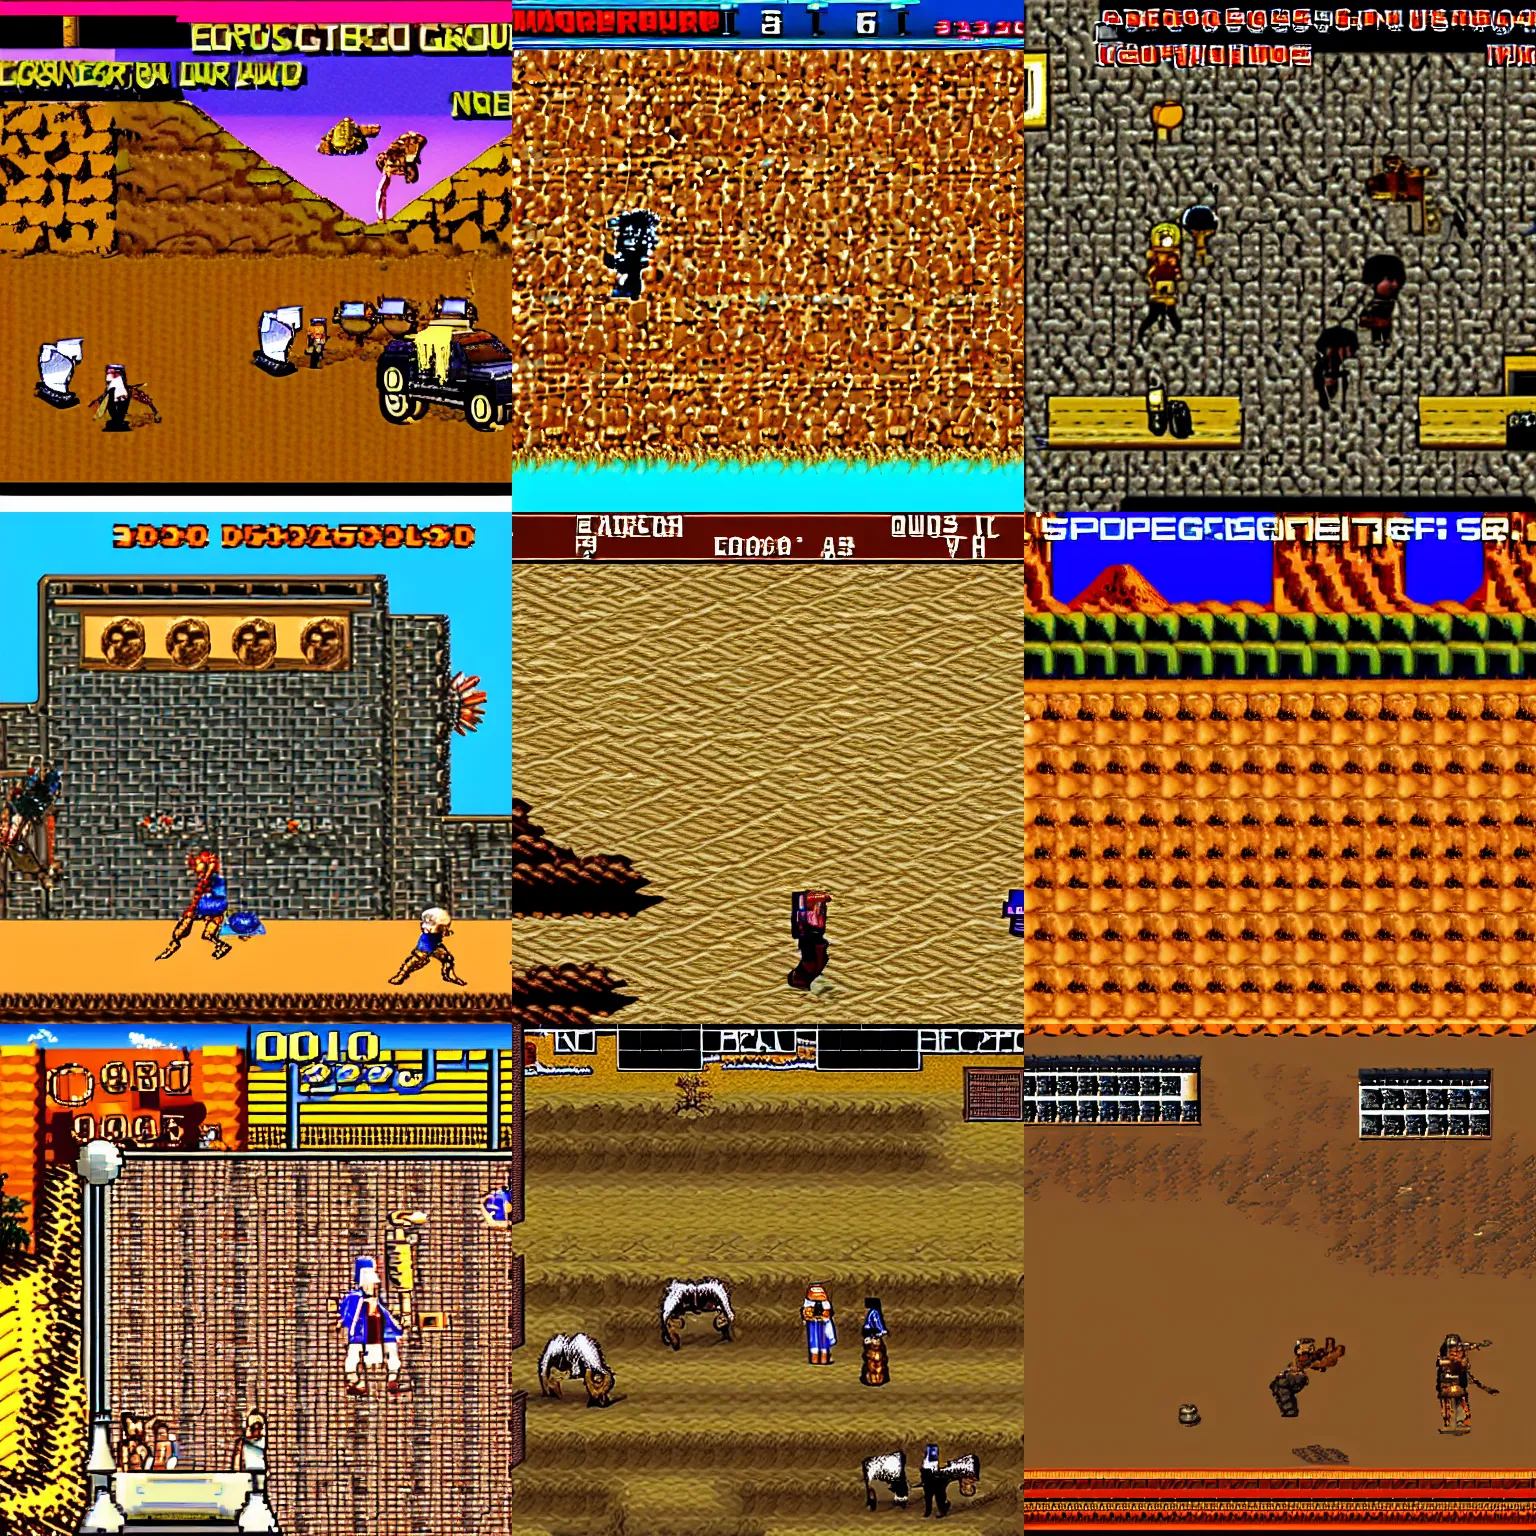 Prompt: a neo geo game screenshot, sahara desert game